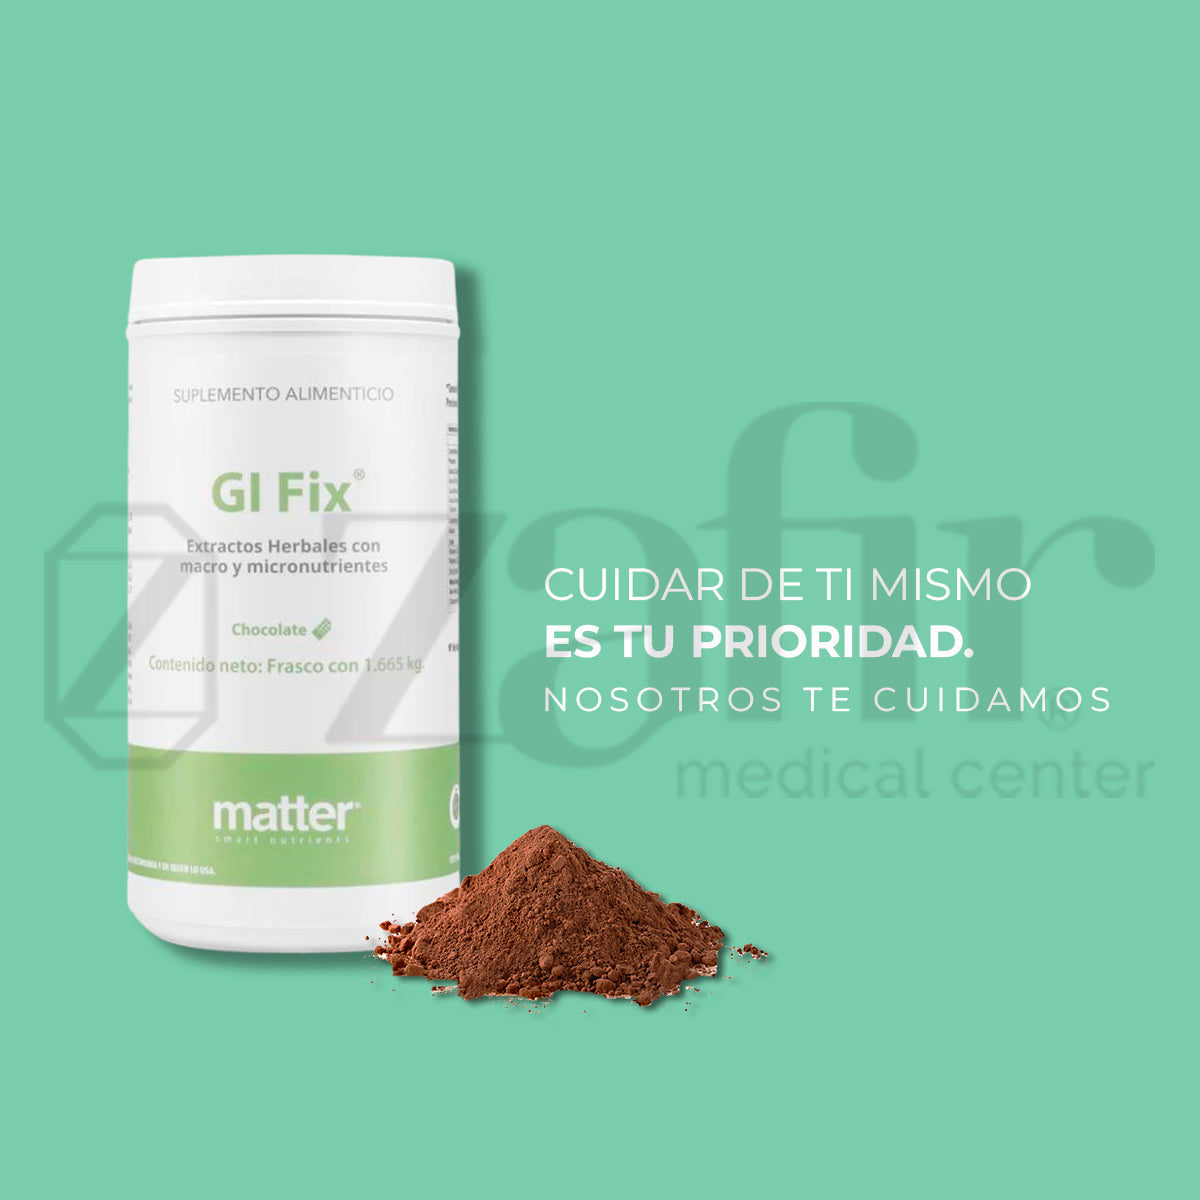 GI Fix proteína Matter en polvo (chocolate) 1665 kg